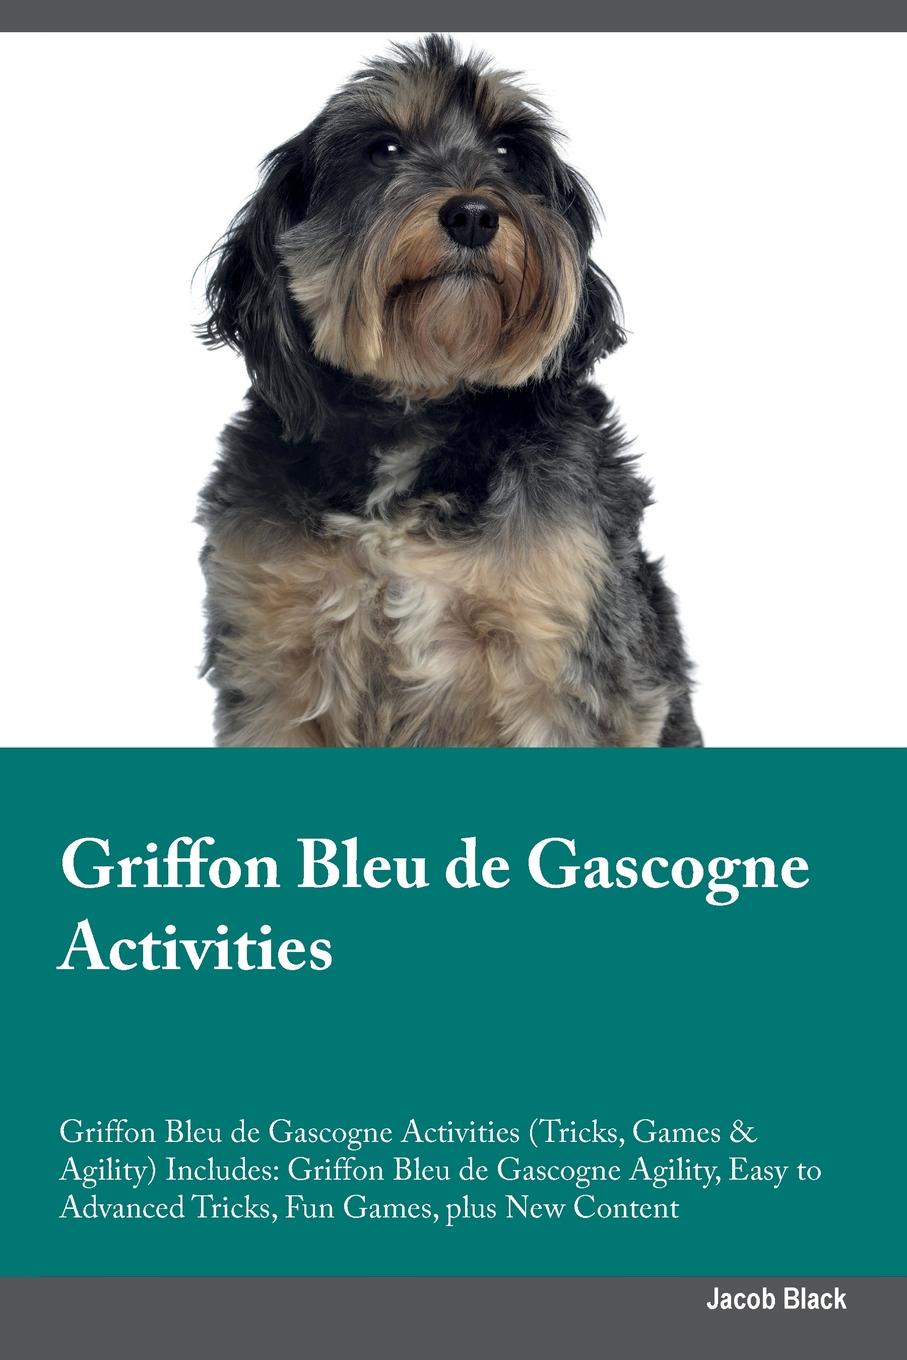 Griffon Bleu de Gascogne Activities Griffon Bleu de Gascogne Activities (Tricks, Games & Agility) Includes. Griffon Bleu de Gascogne Agility, Easy to Advanced Tricks, Fun Games, plus New Content